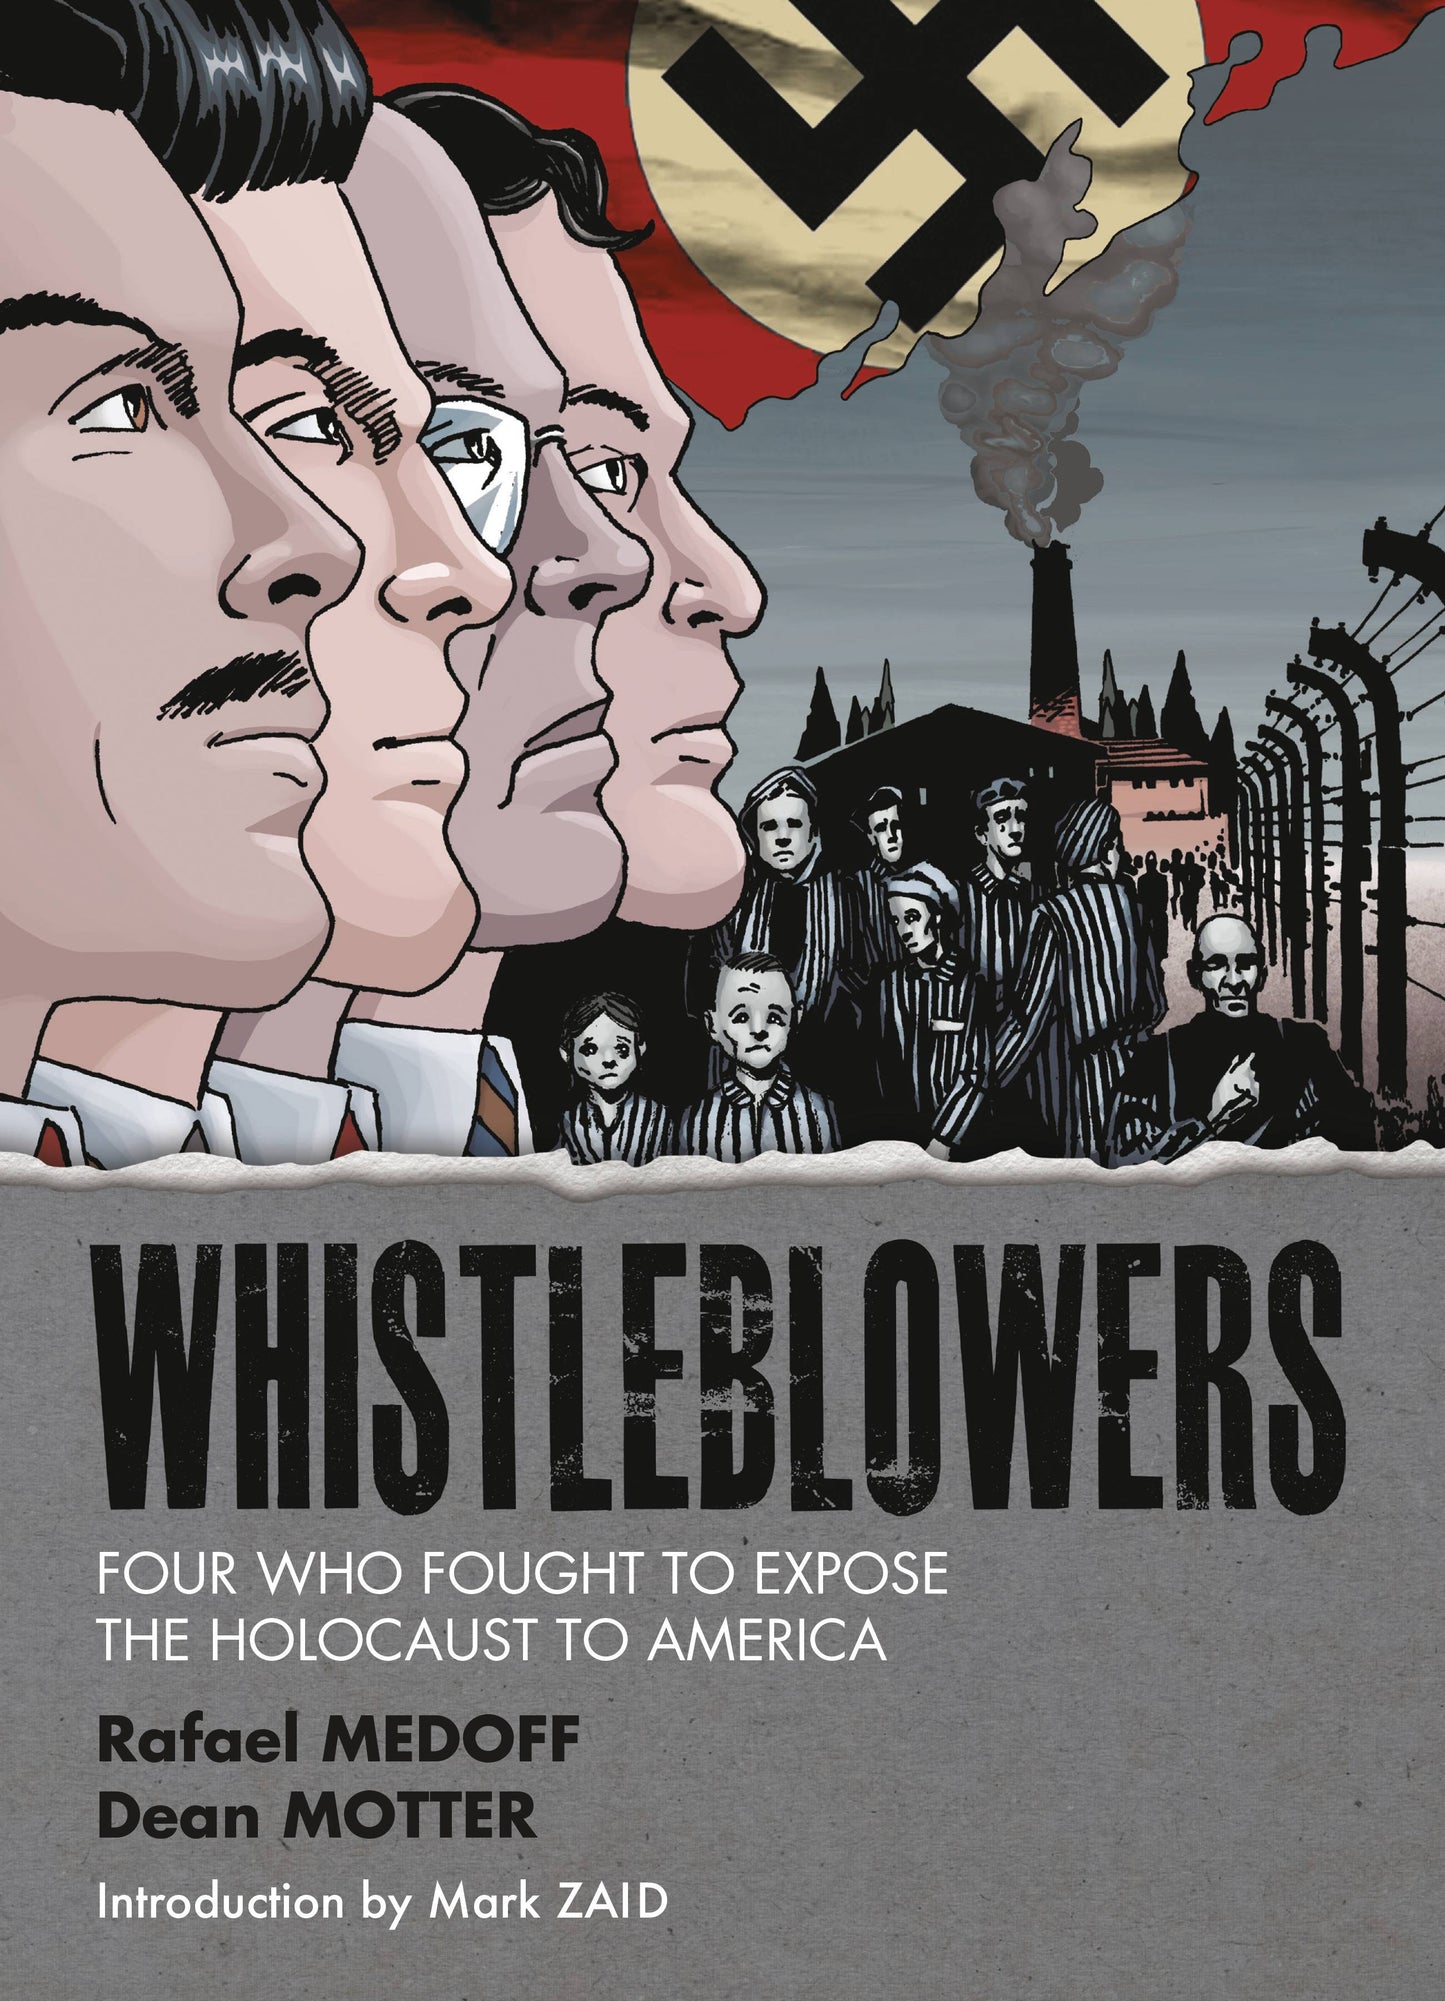 Whistleblowers Four Who Fought